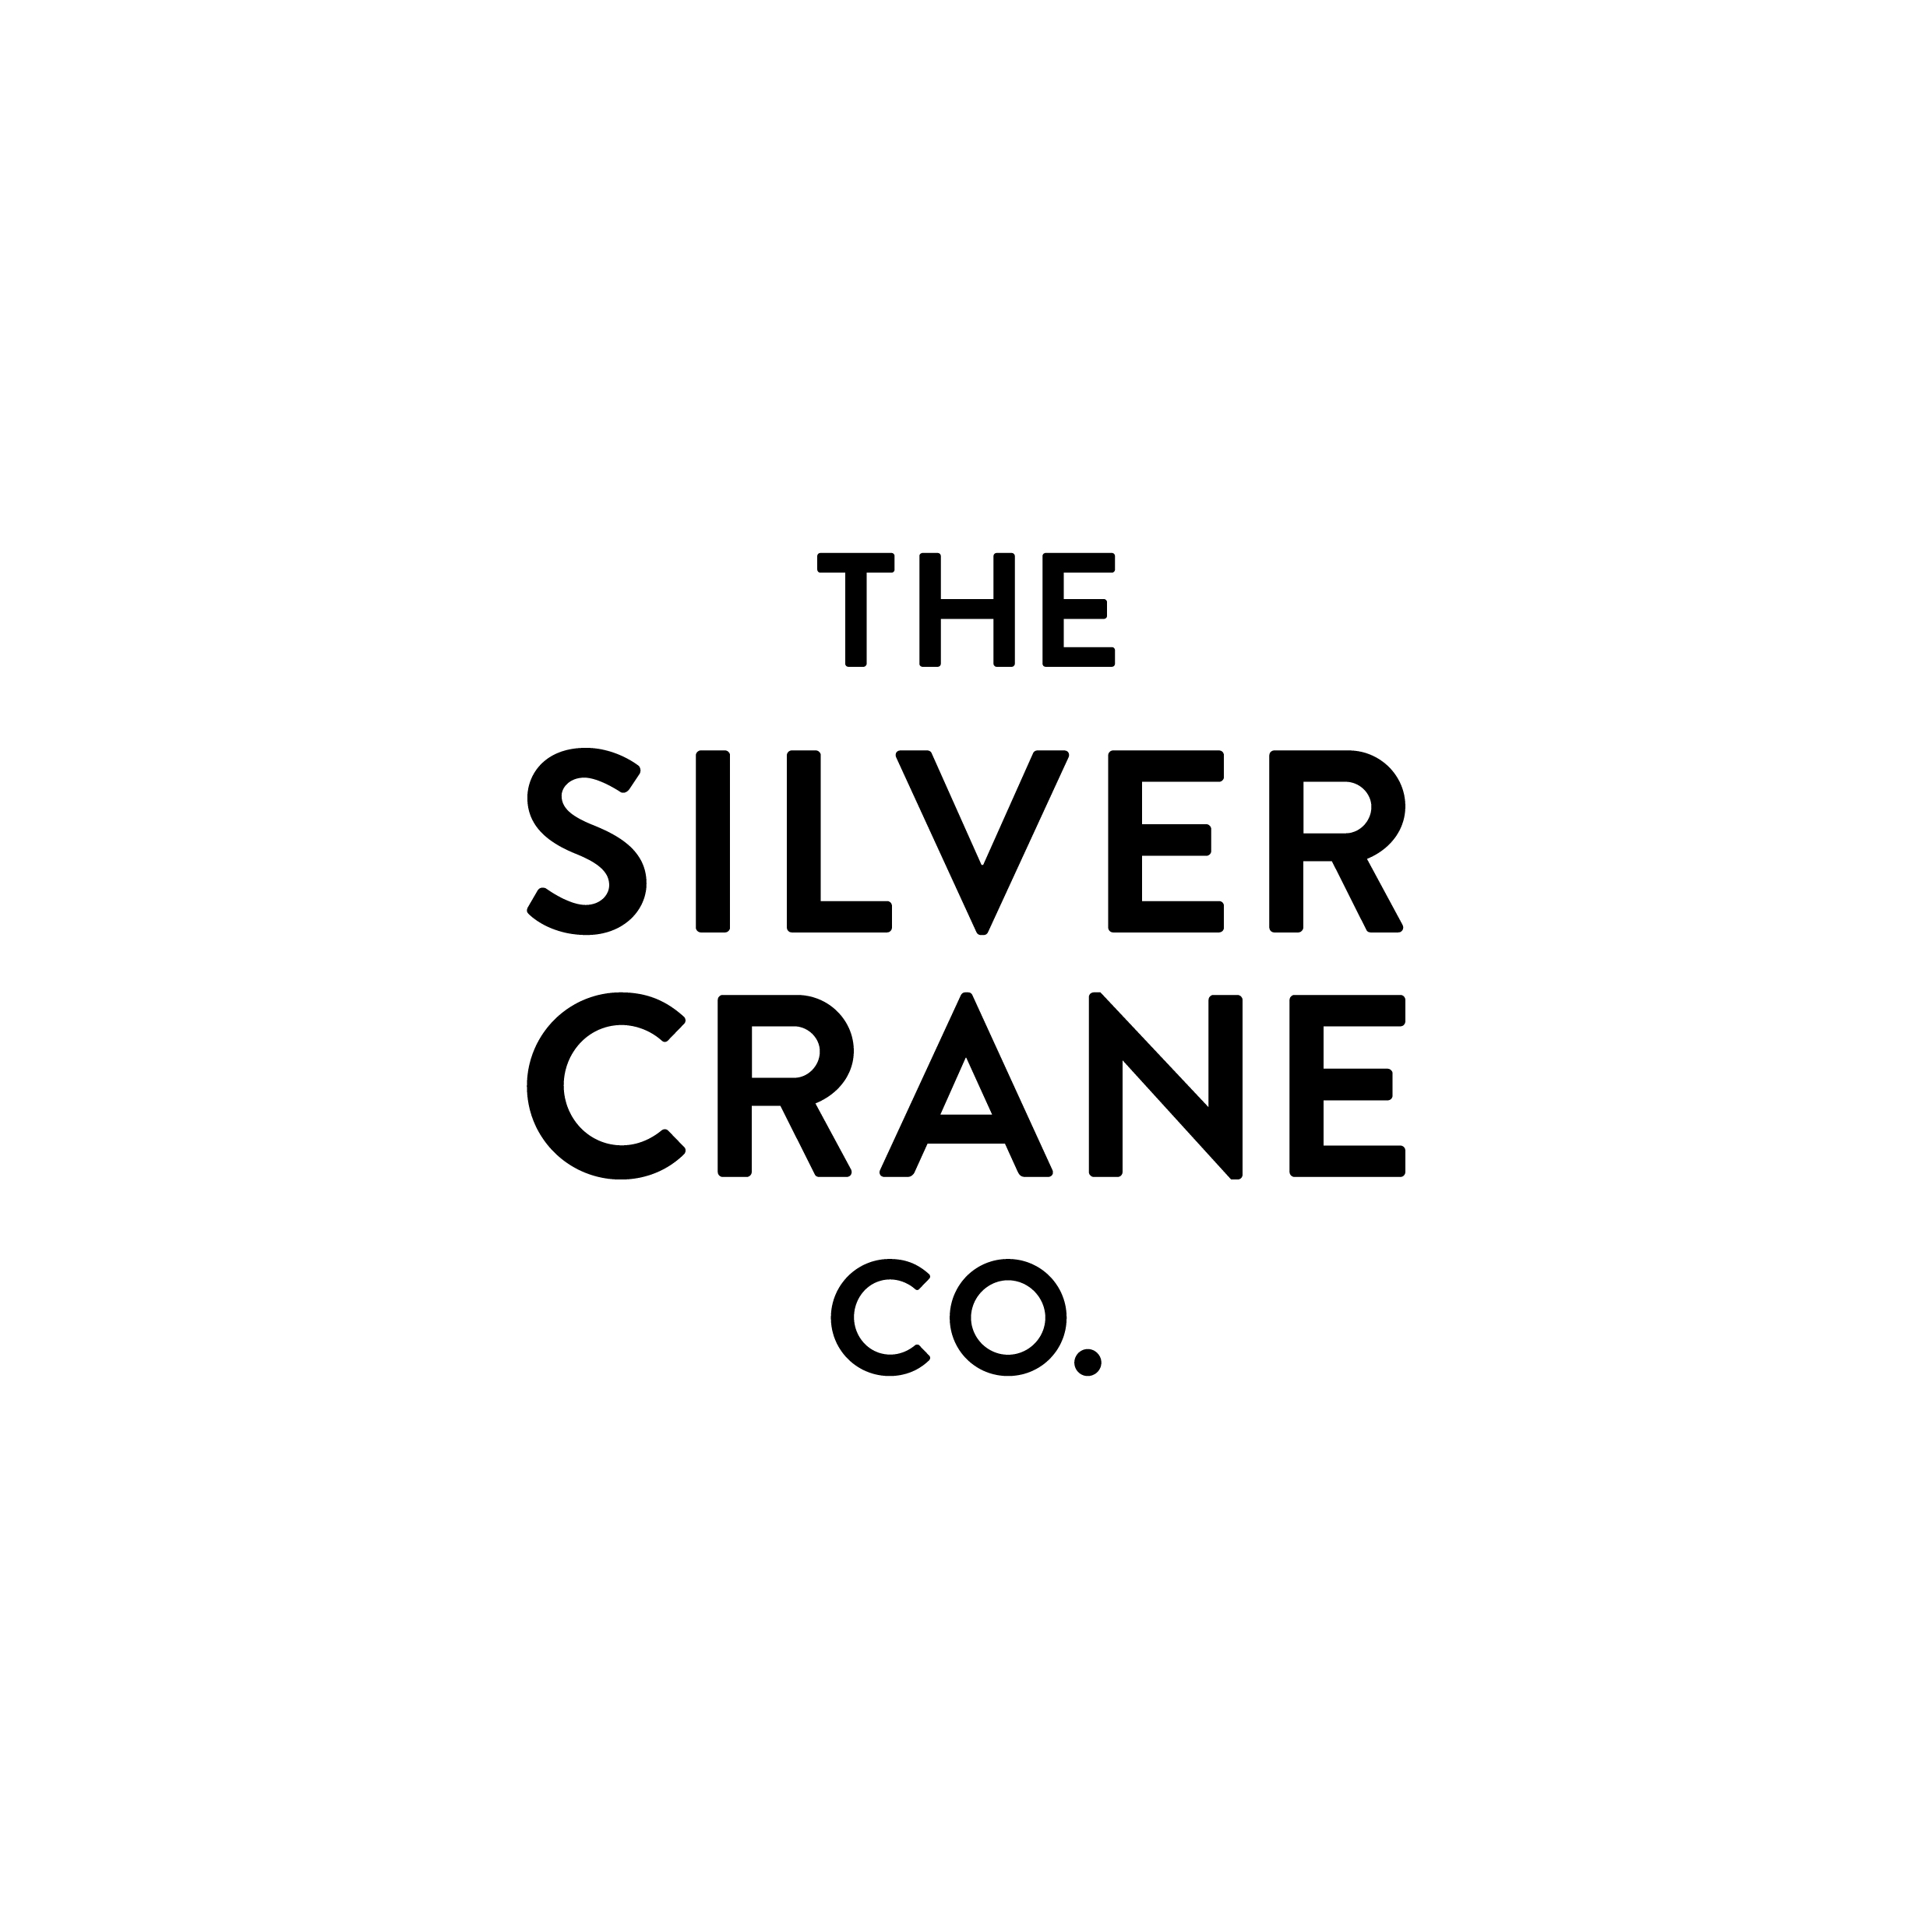 The Silver Crane Company Limited